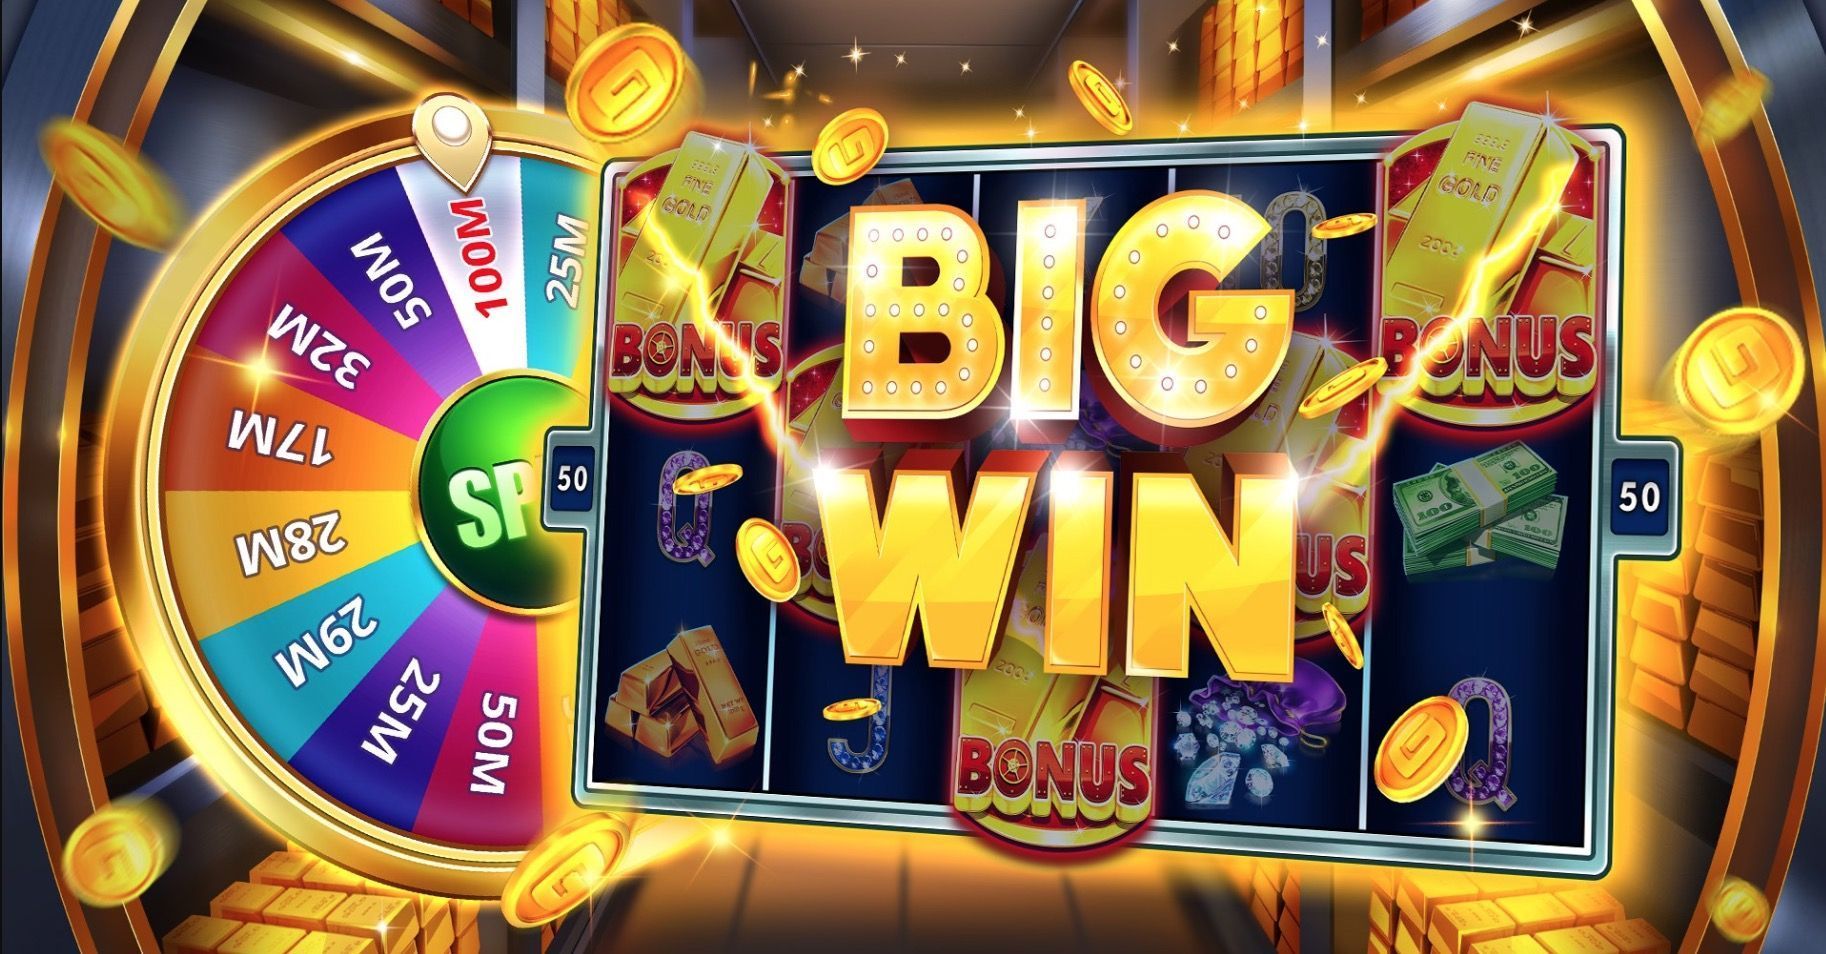 UK Casino Online for Big Wins